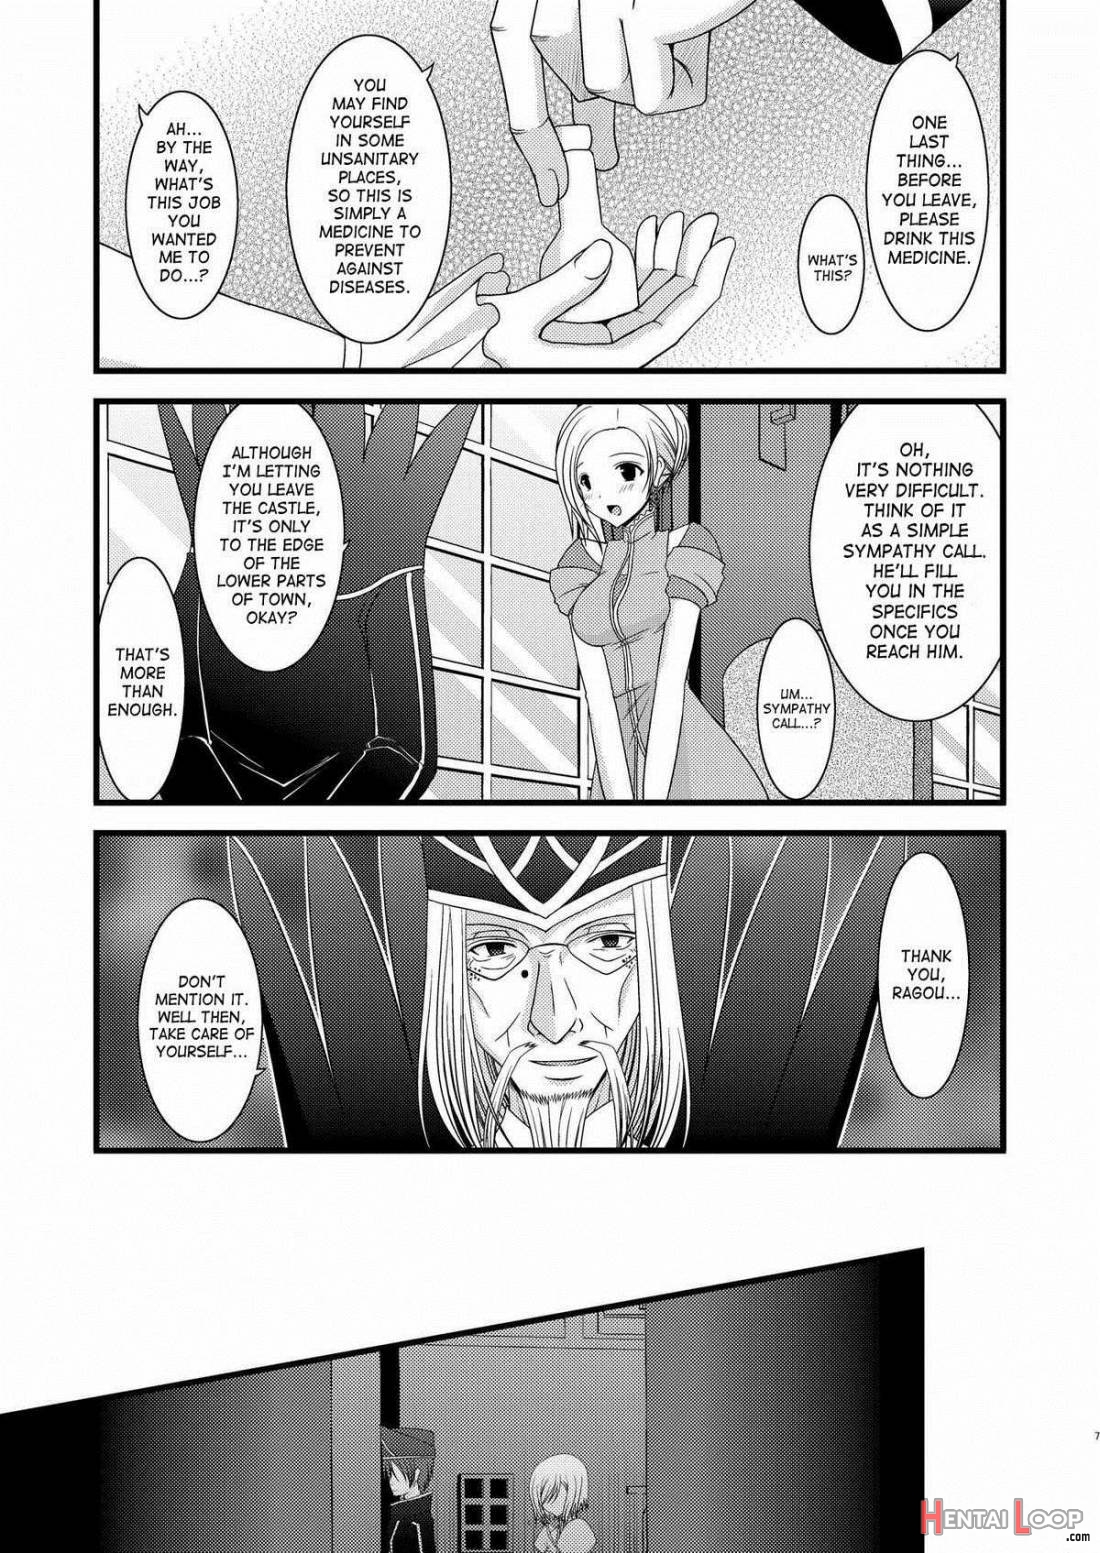 Mangetsu San Tan page 6